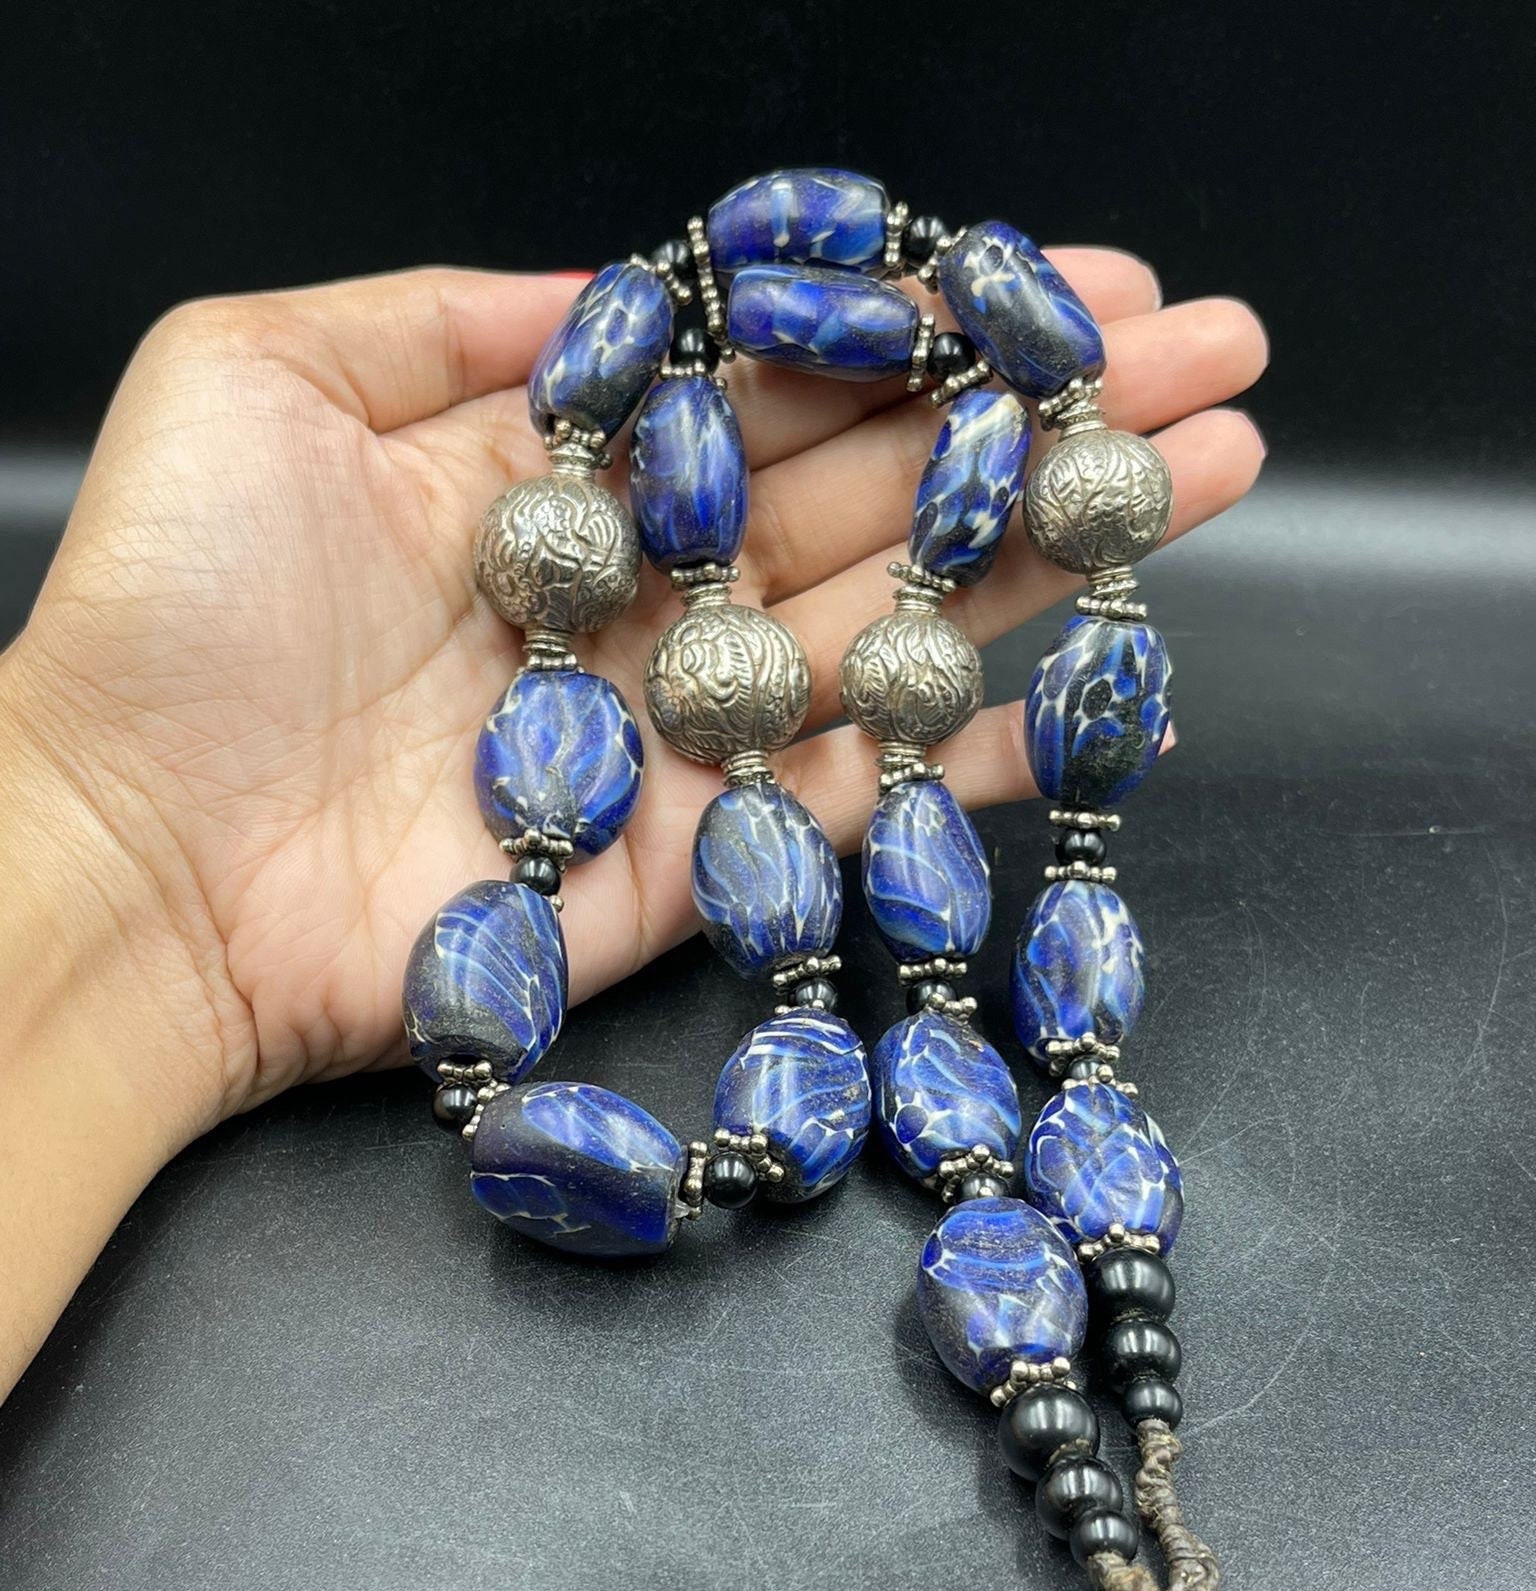 10 Pre-Islamic Glass Beads